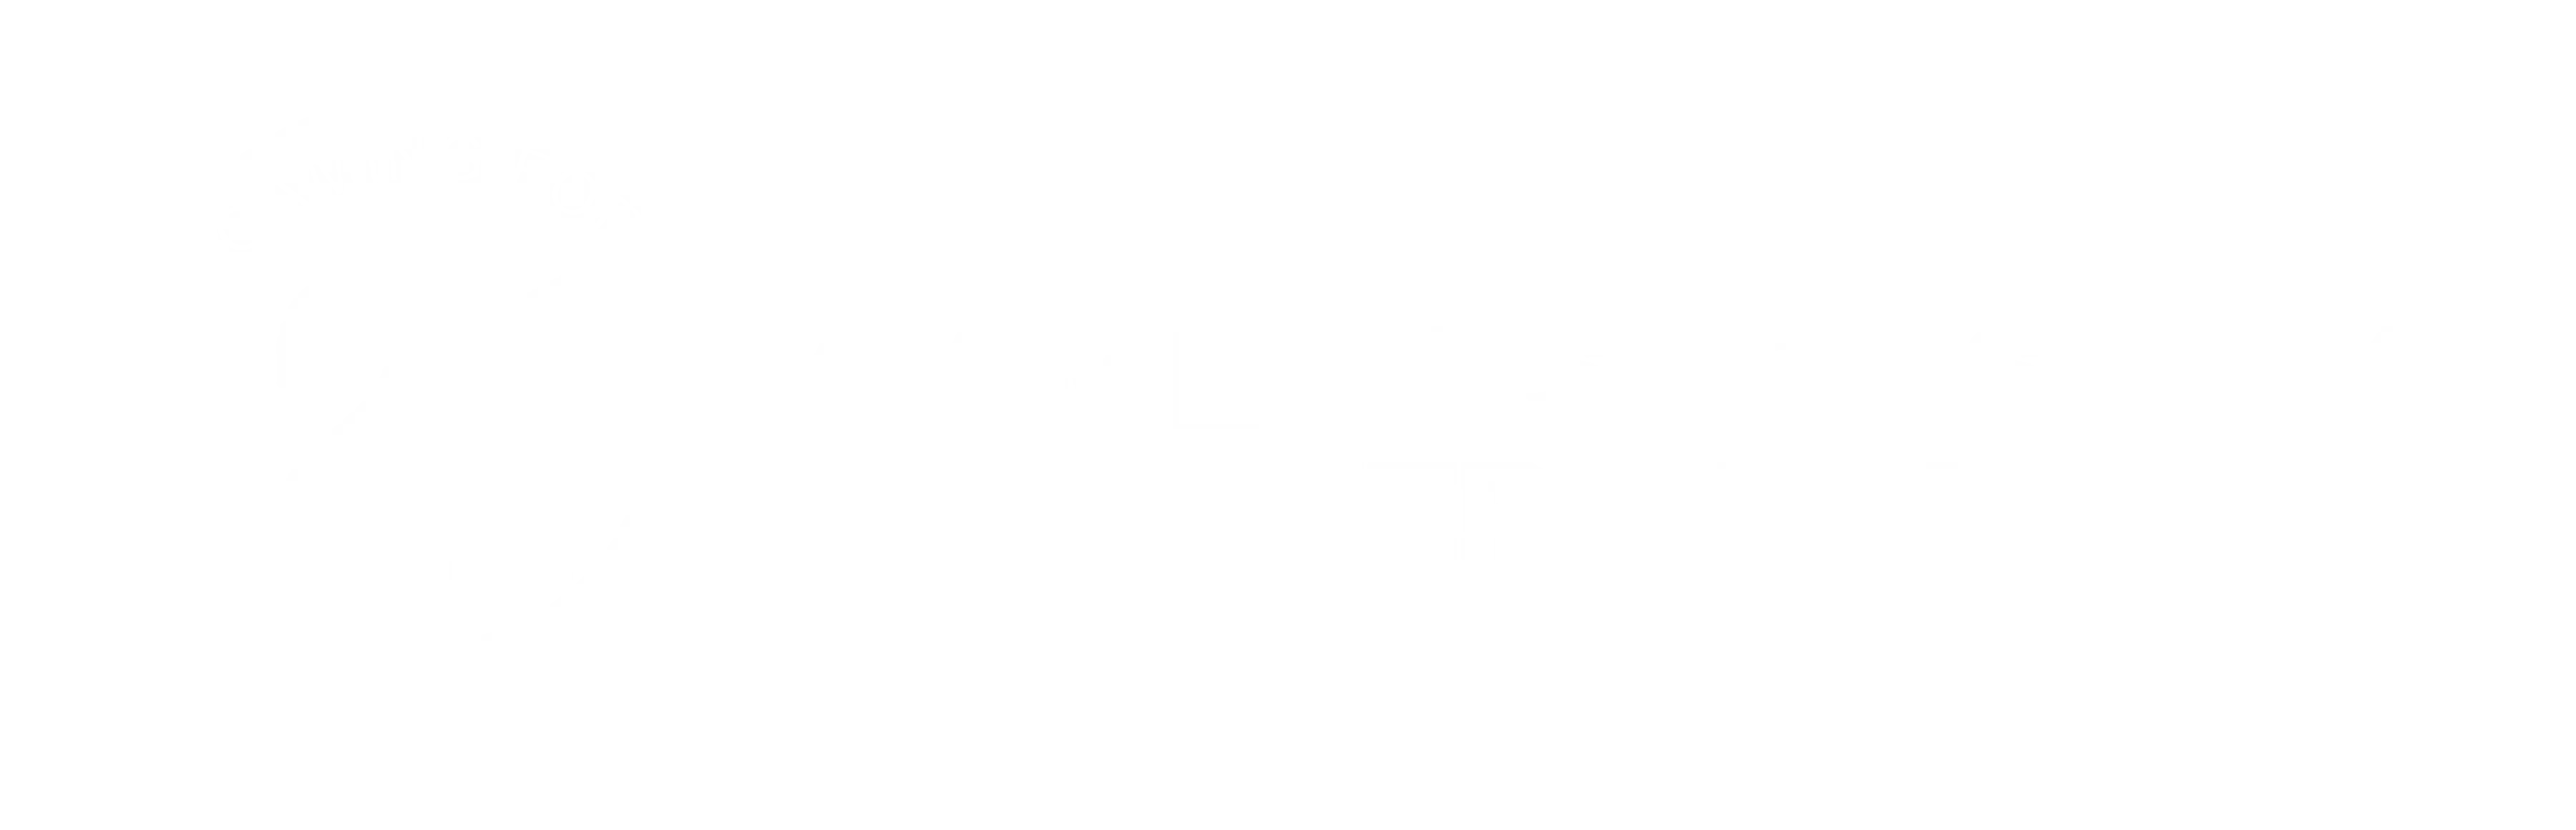 Game Responsibly | Keep it fun!